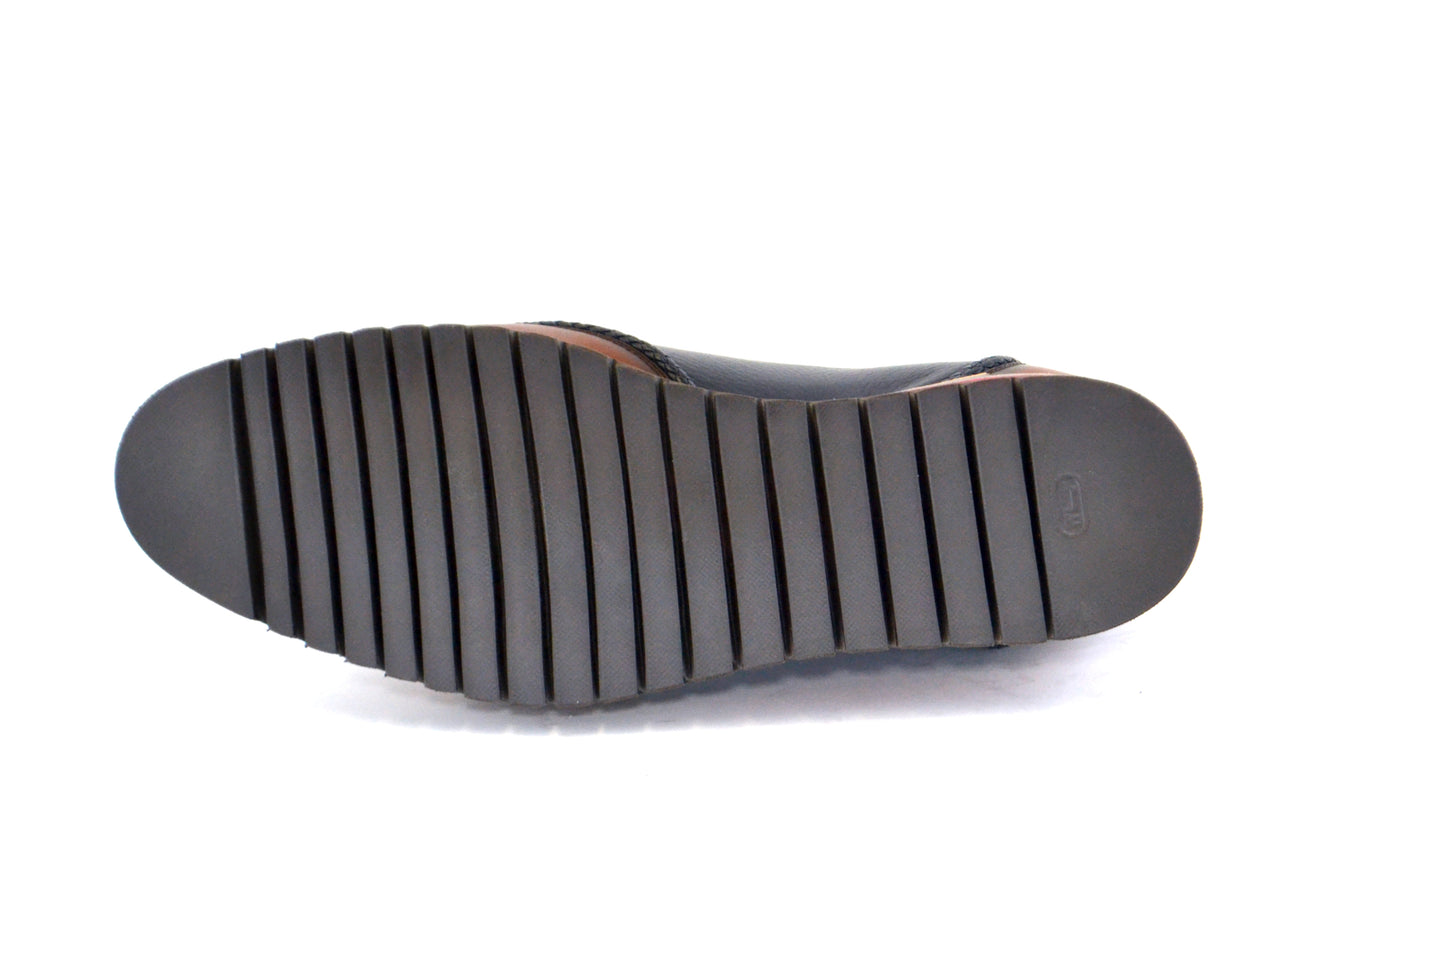 C208-4002 Fashion Sneaker- Brown-Navy